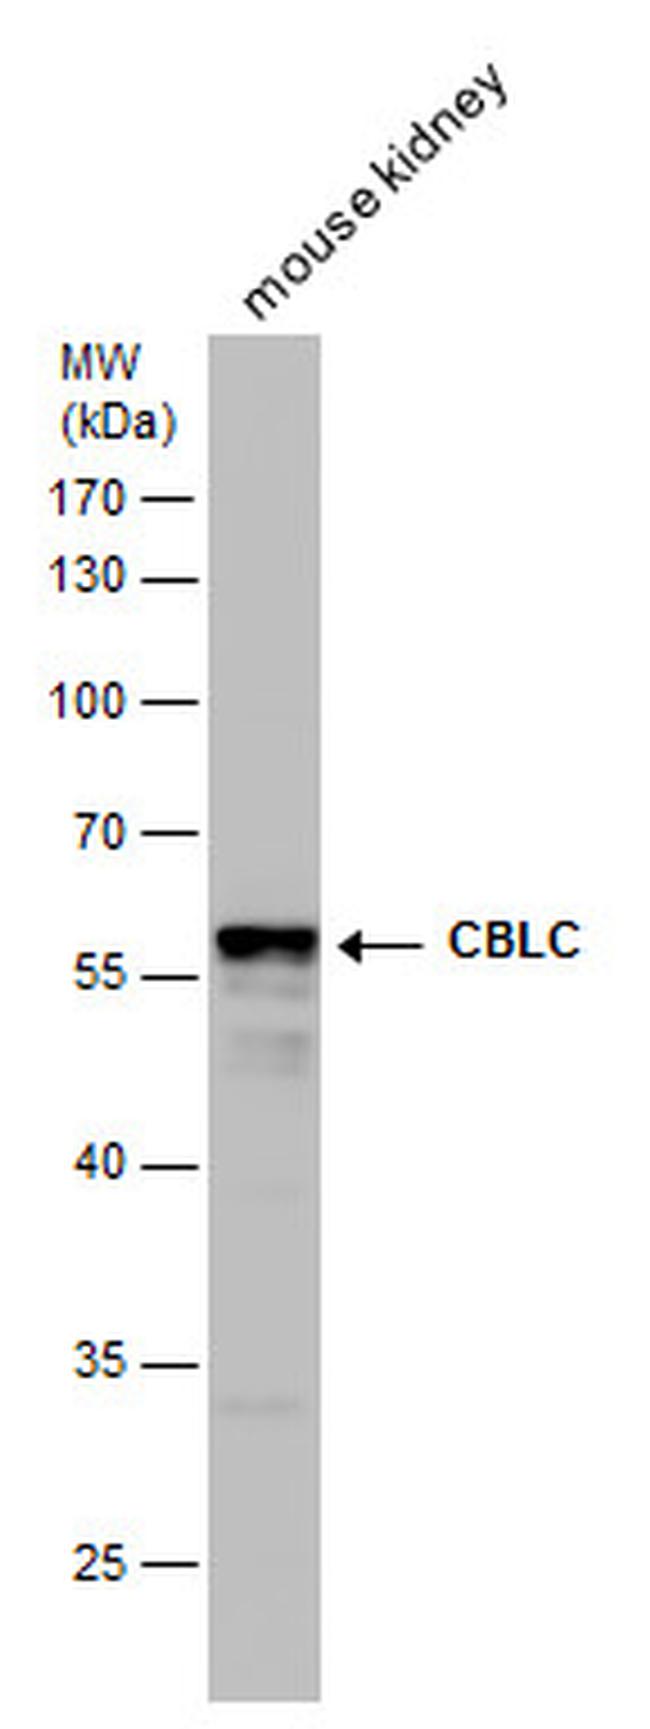 CBLC Antibody in Western Blot (WB)